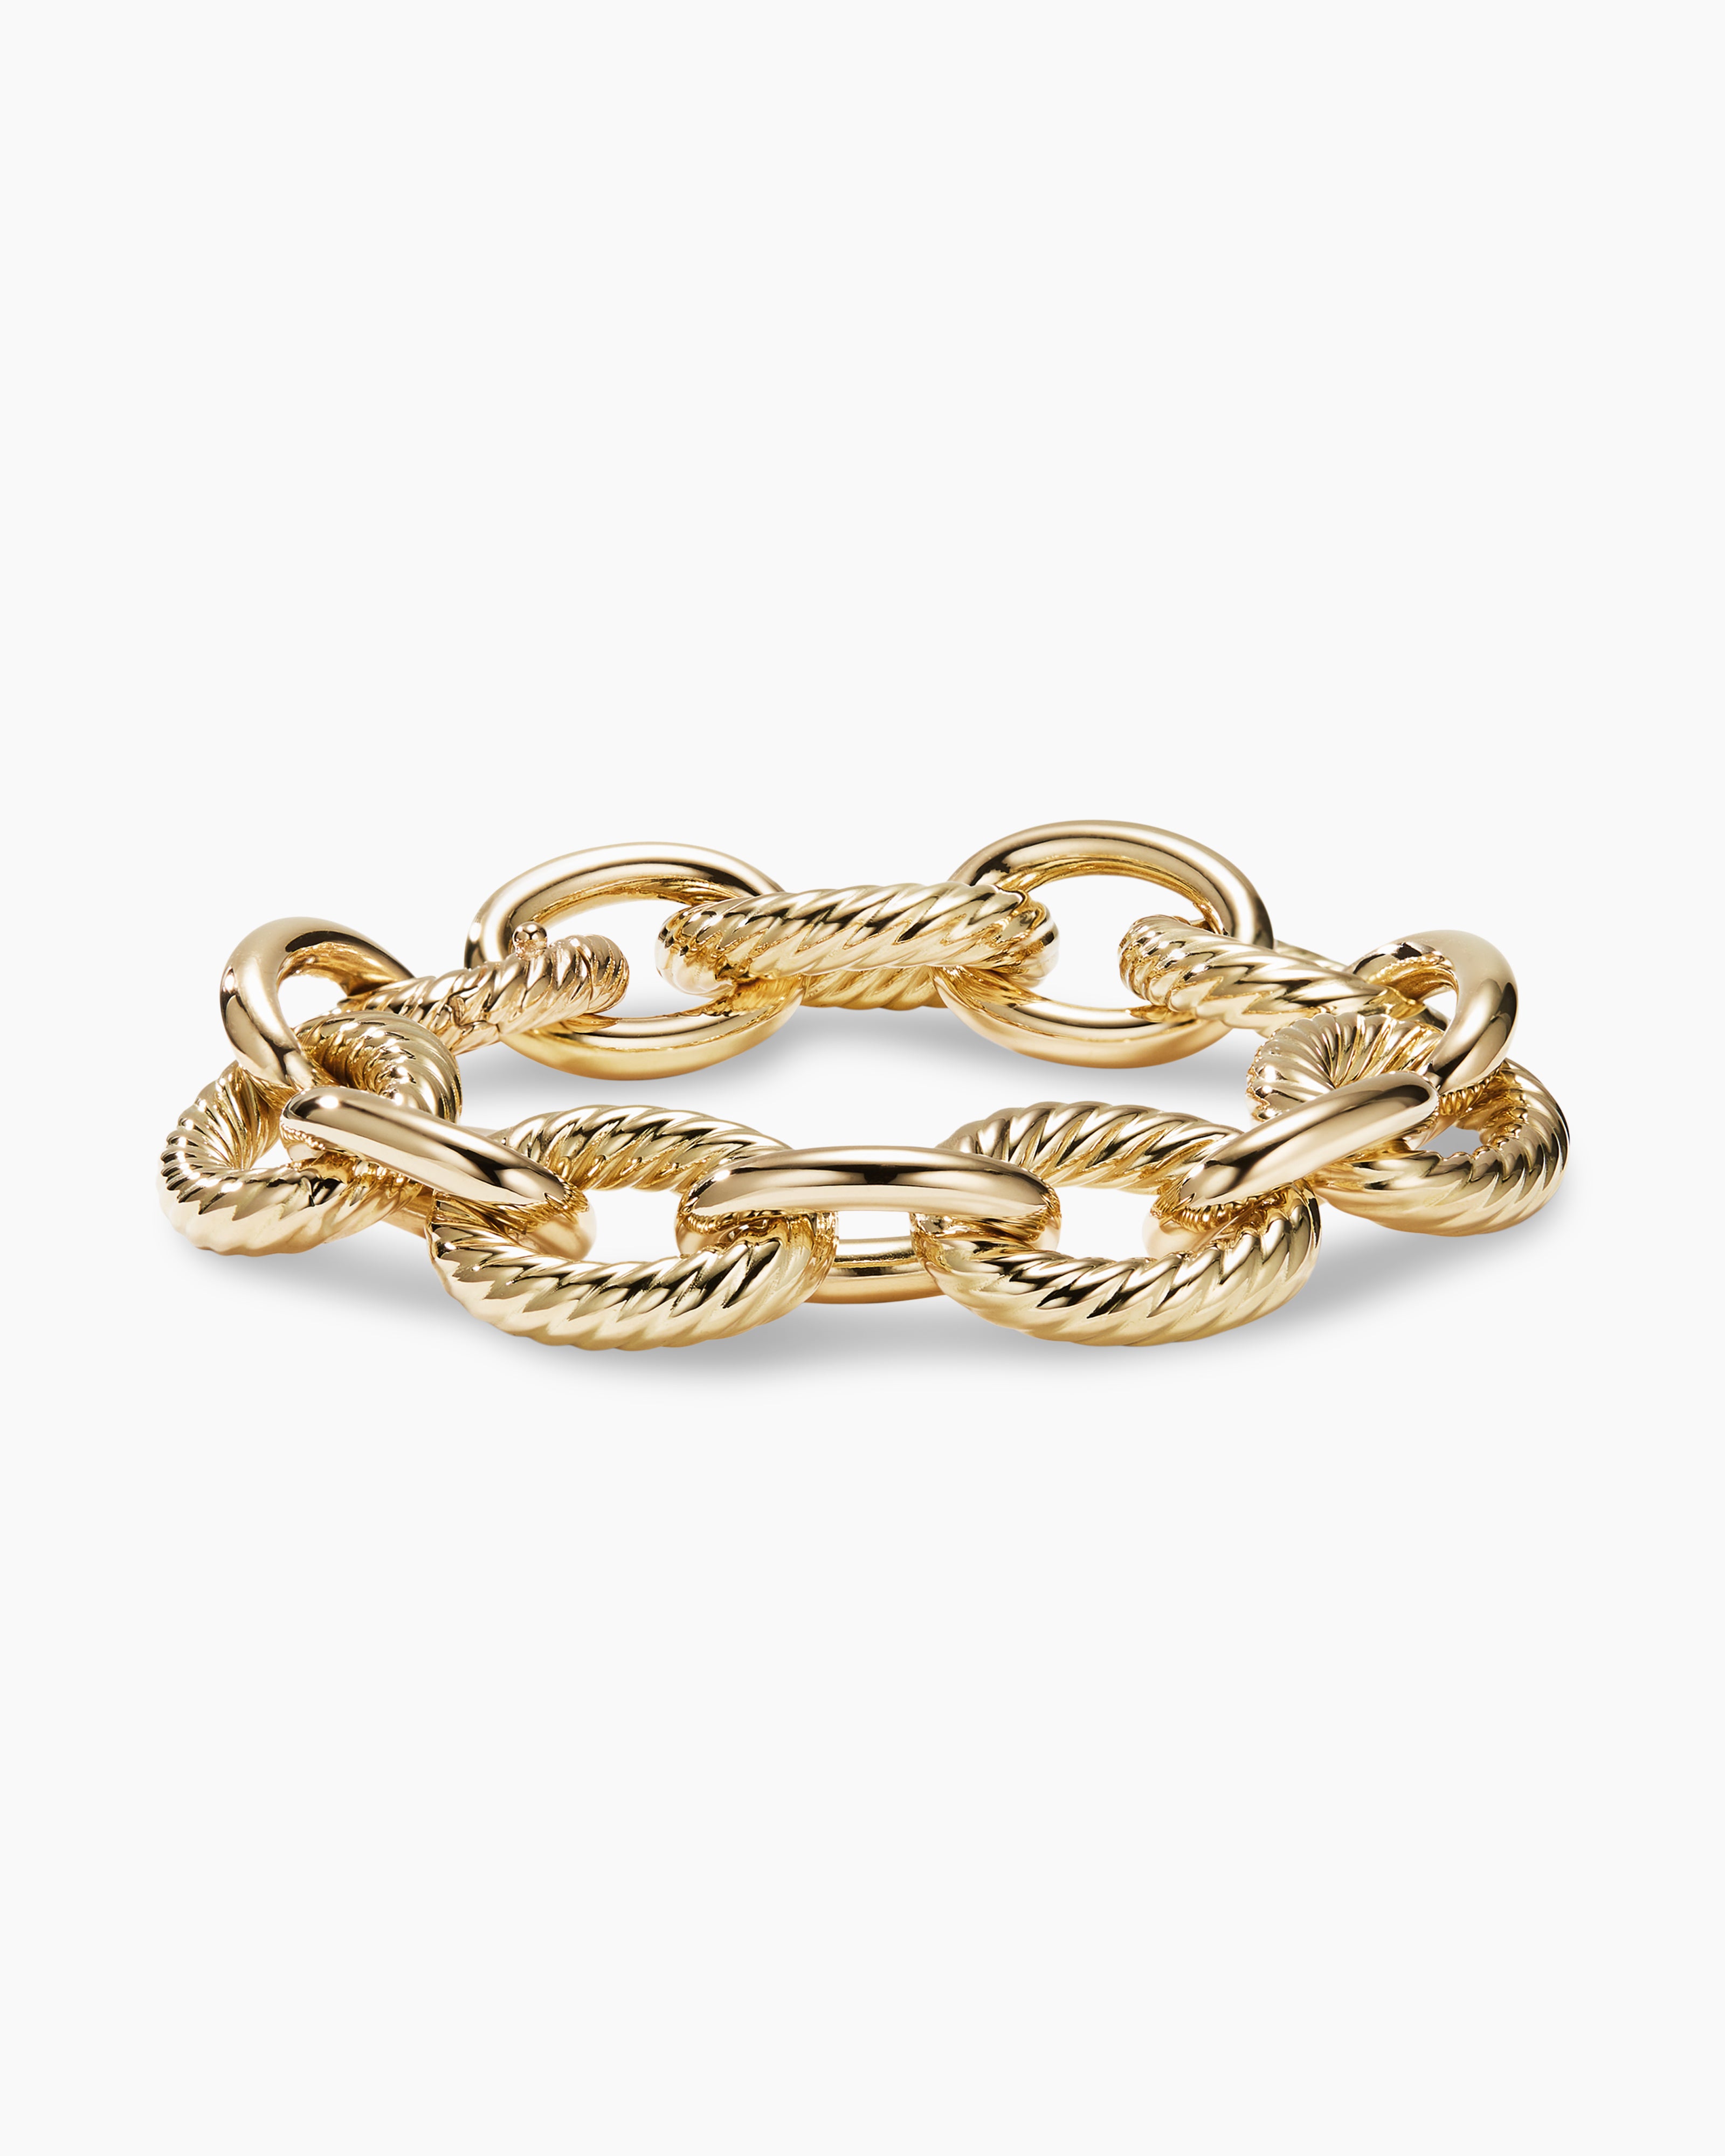 1967 oval curb link heart lock bracelet in yellow gold